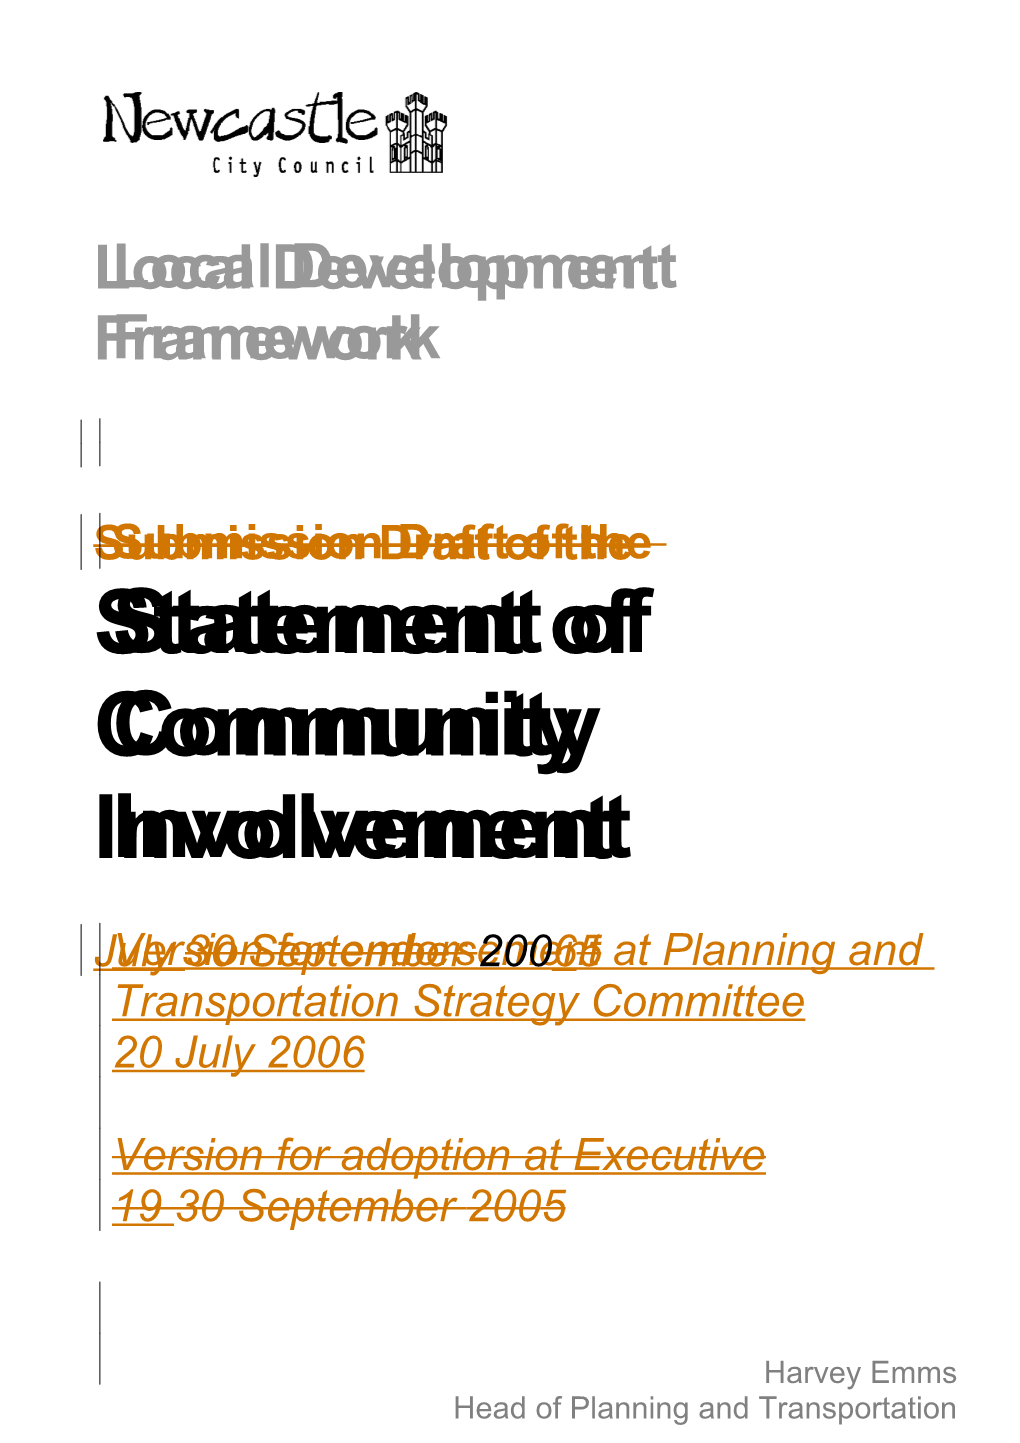 Newcastle City Council - Local Development Framework